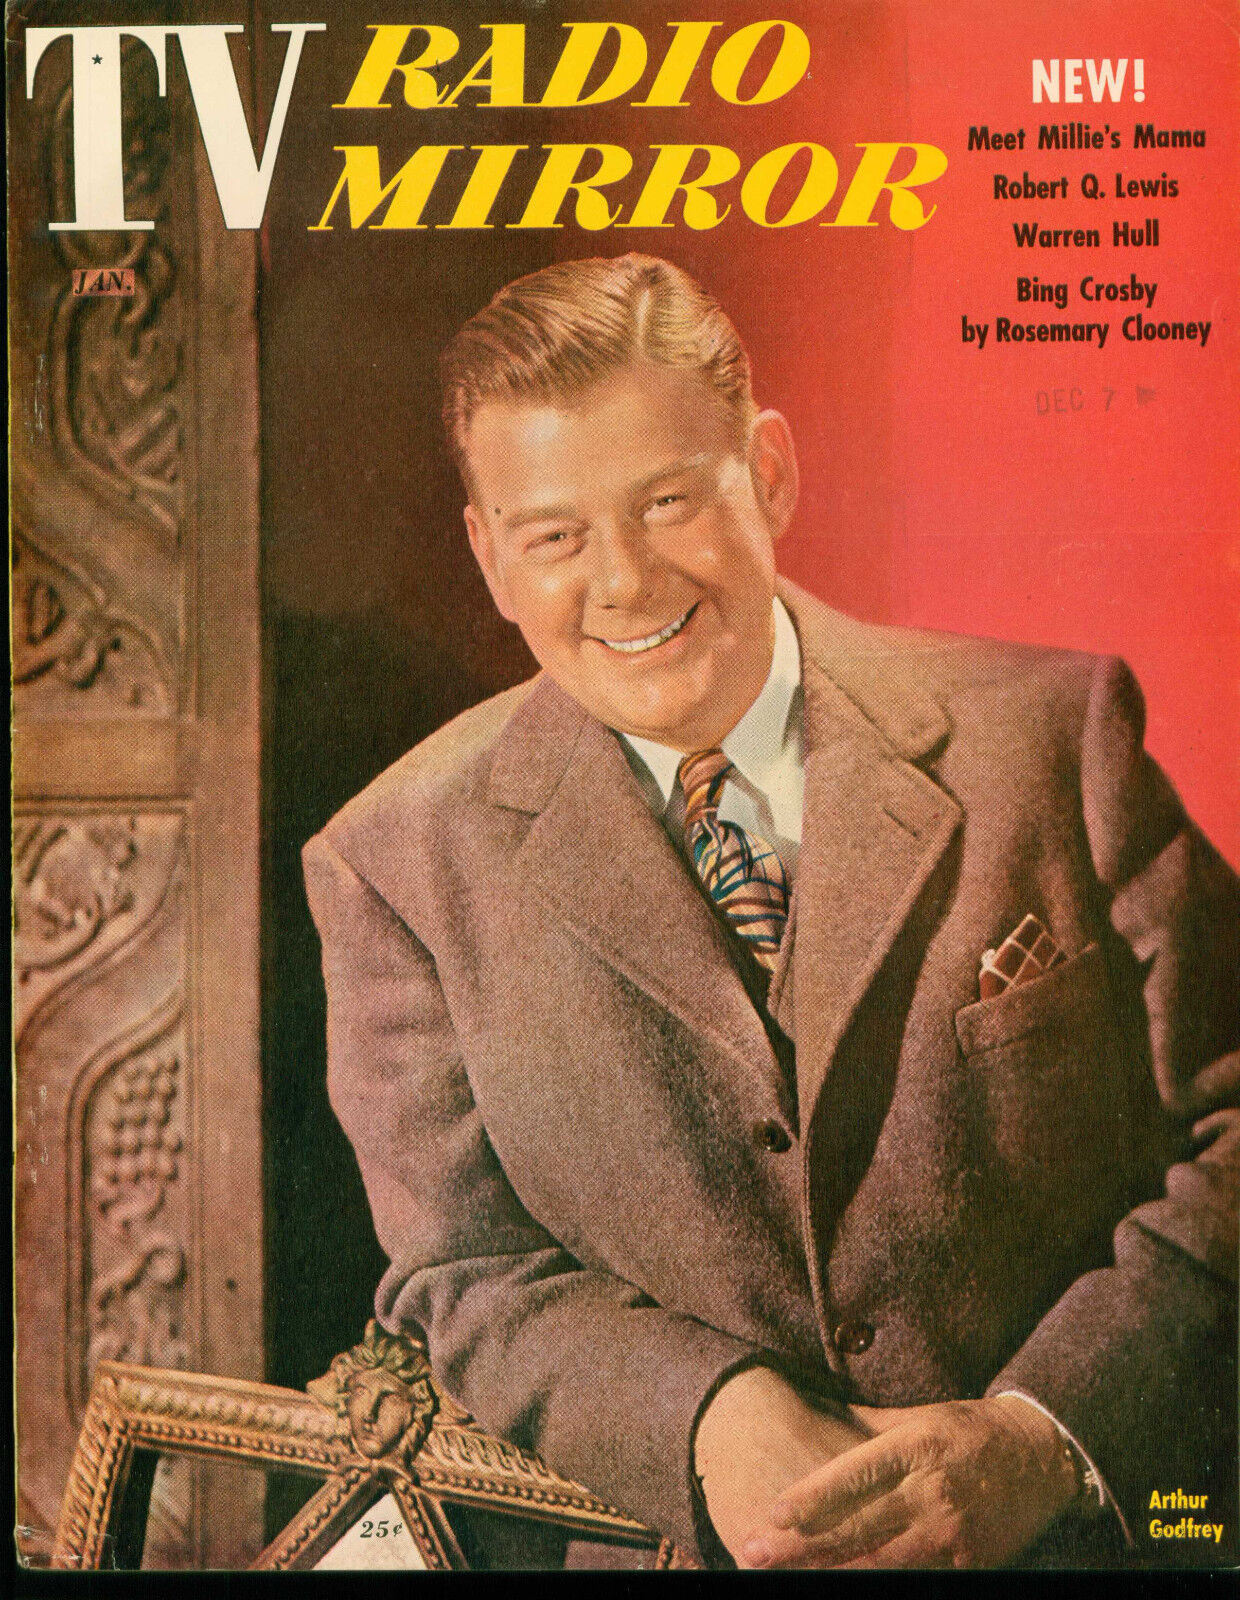  TV-Radio Mirror Magazine January 1955, Scarce Fan Magazine, Full of Photos